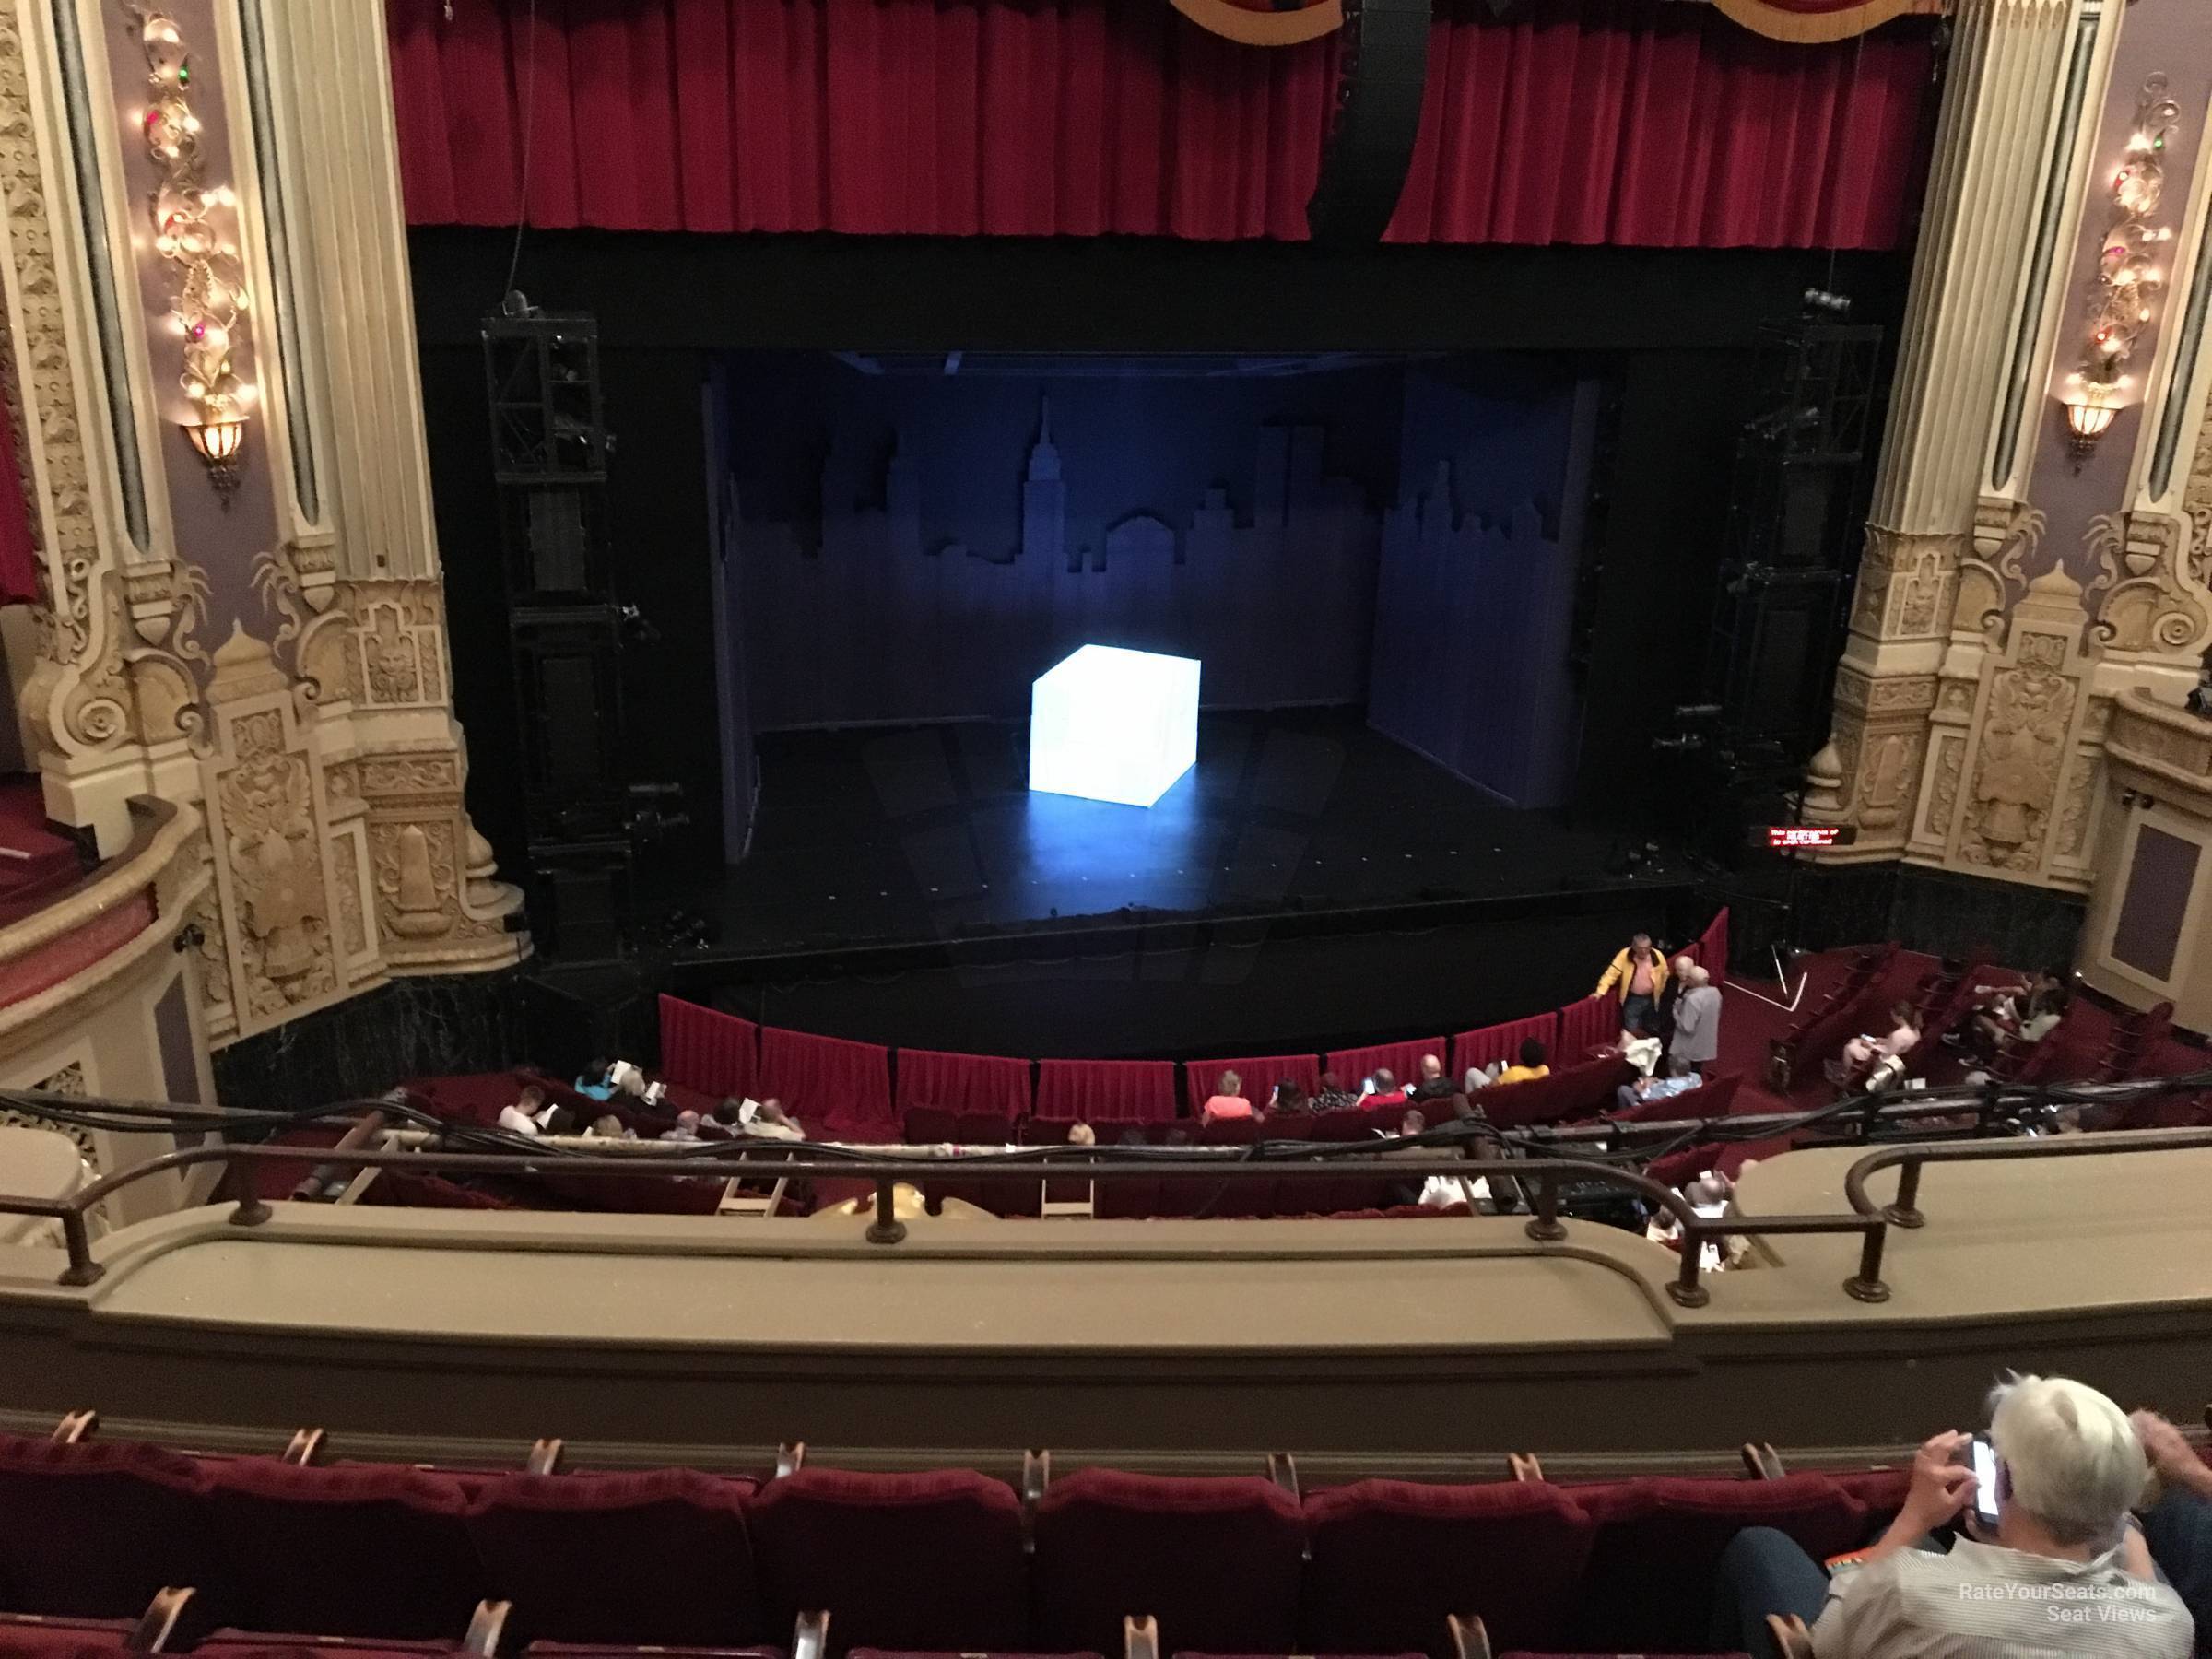 loge left center, row d seat view  - nederlander theatre (chicago)